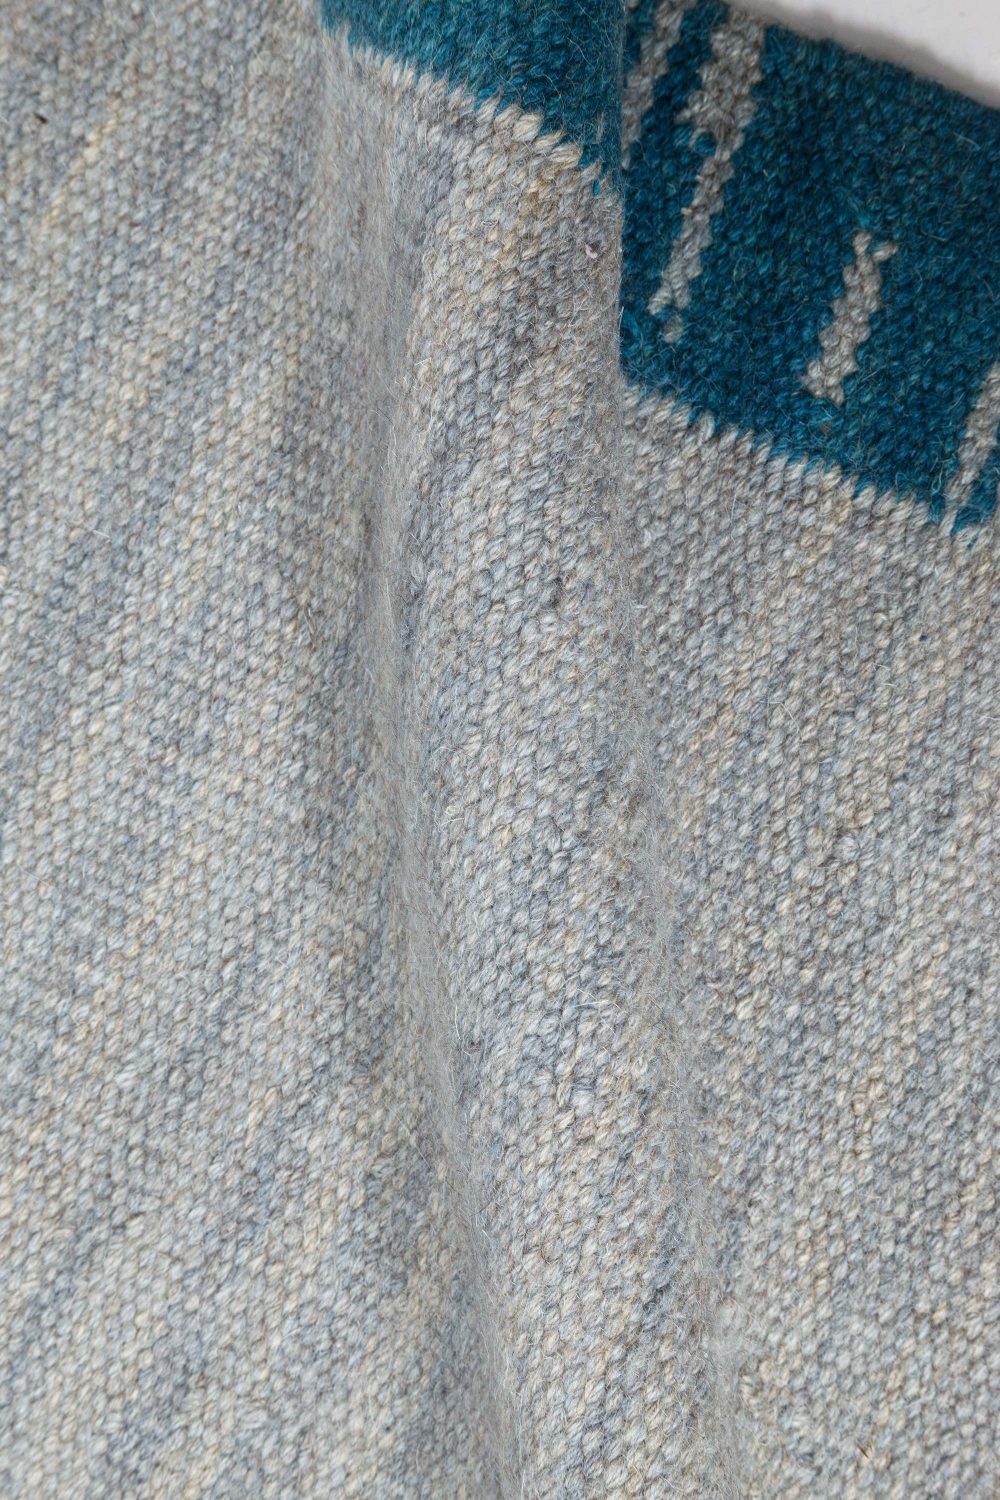 Doris Leslie Blau Collection Gray River Dance Wool Rug N10348